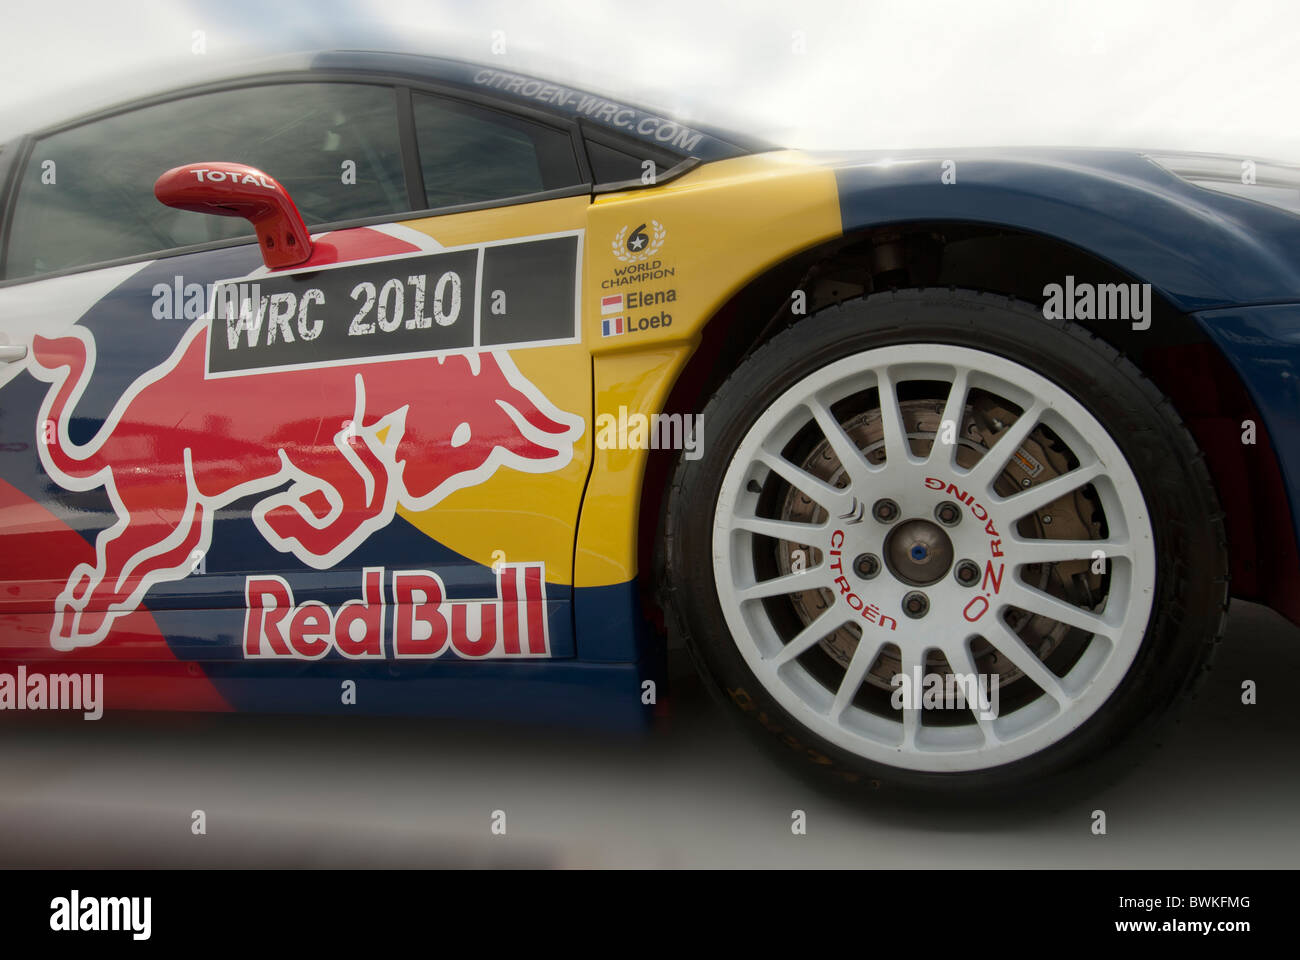 Red Bull WRC rally car Foto de stock